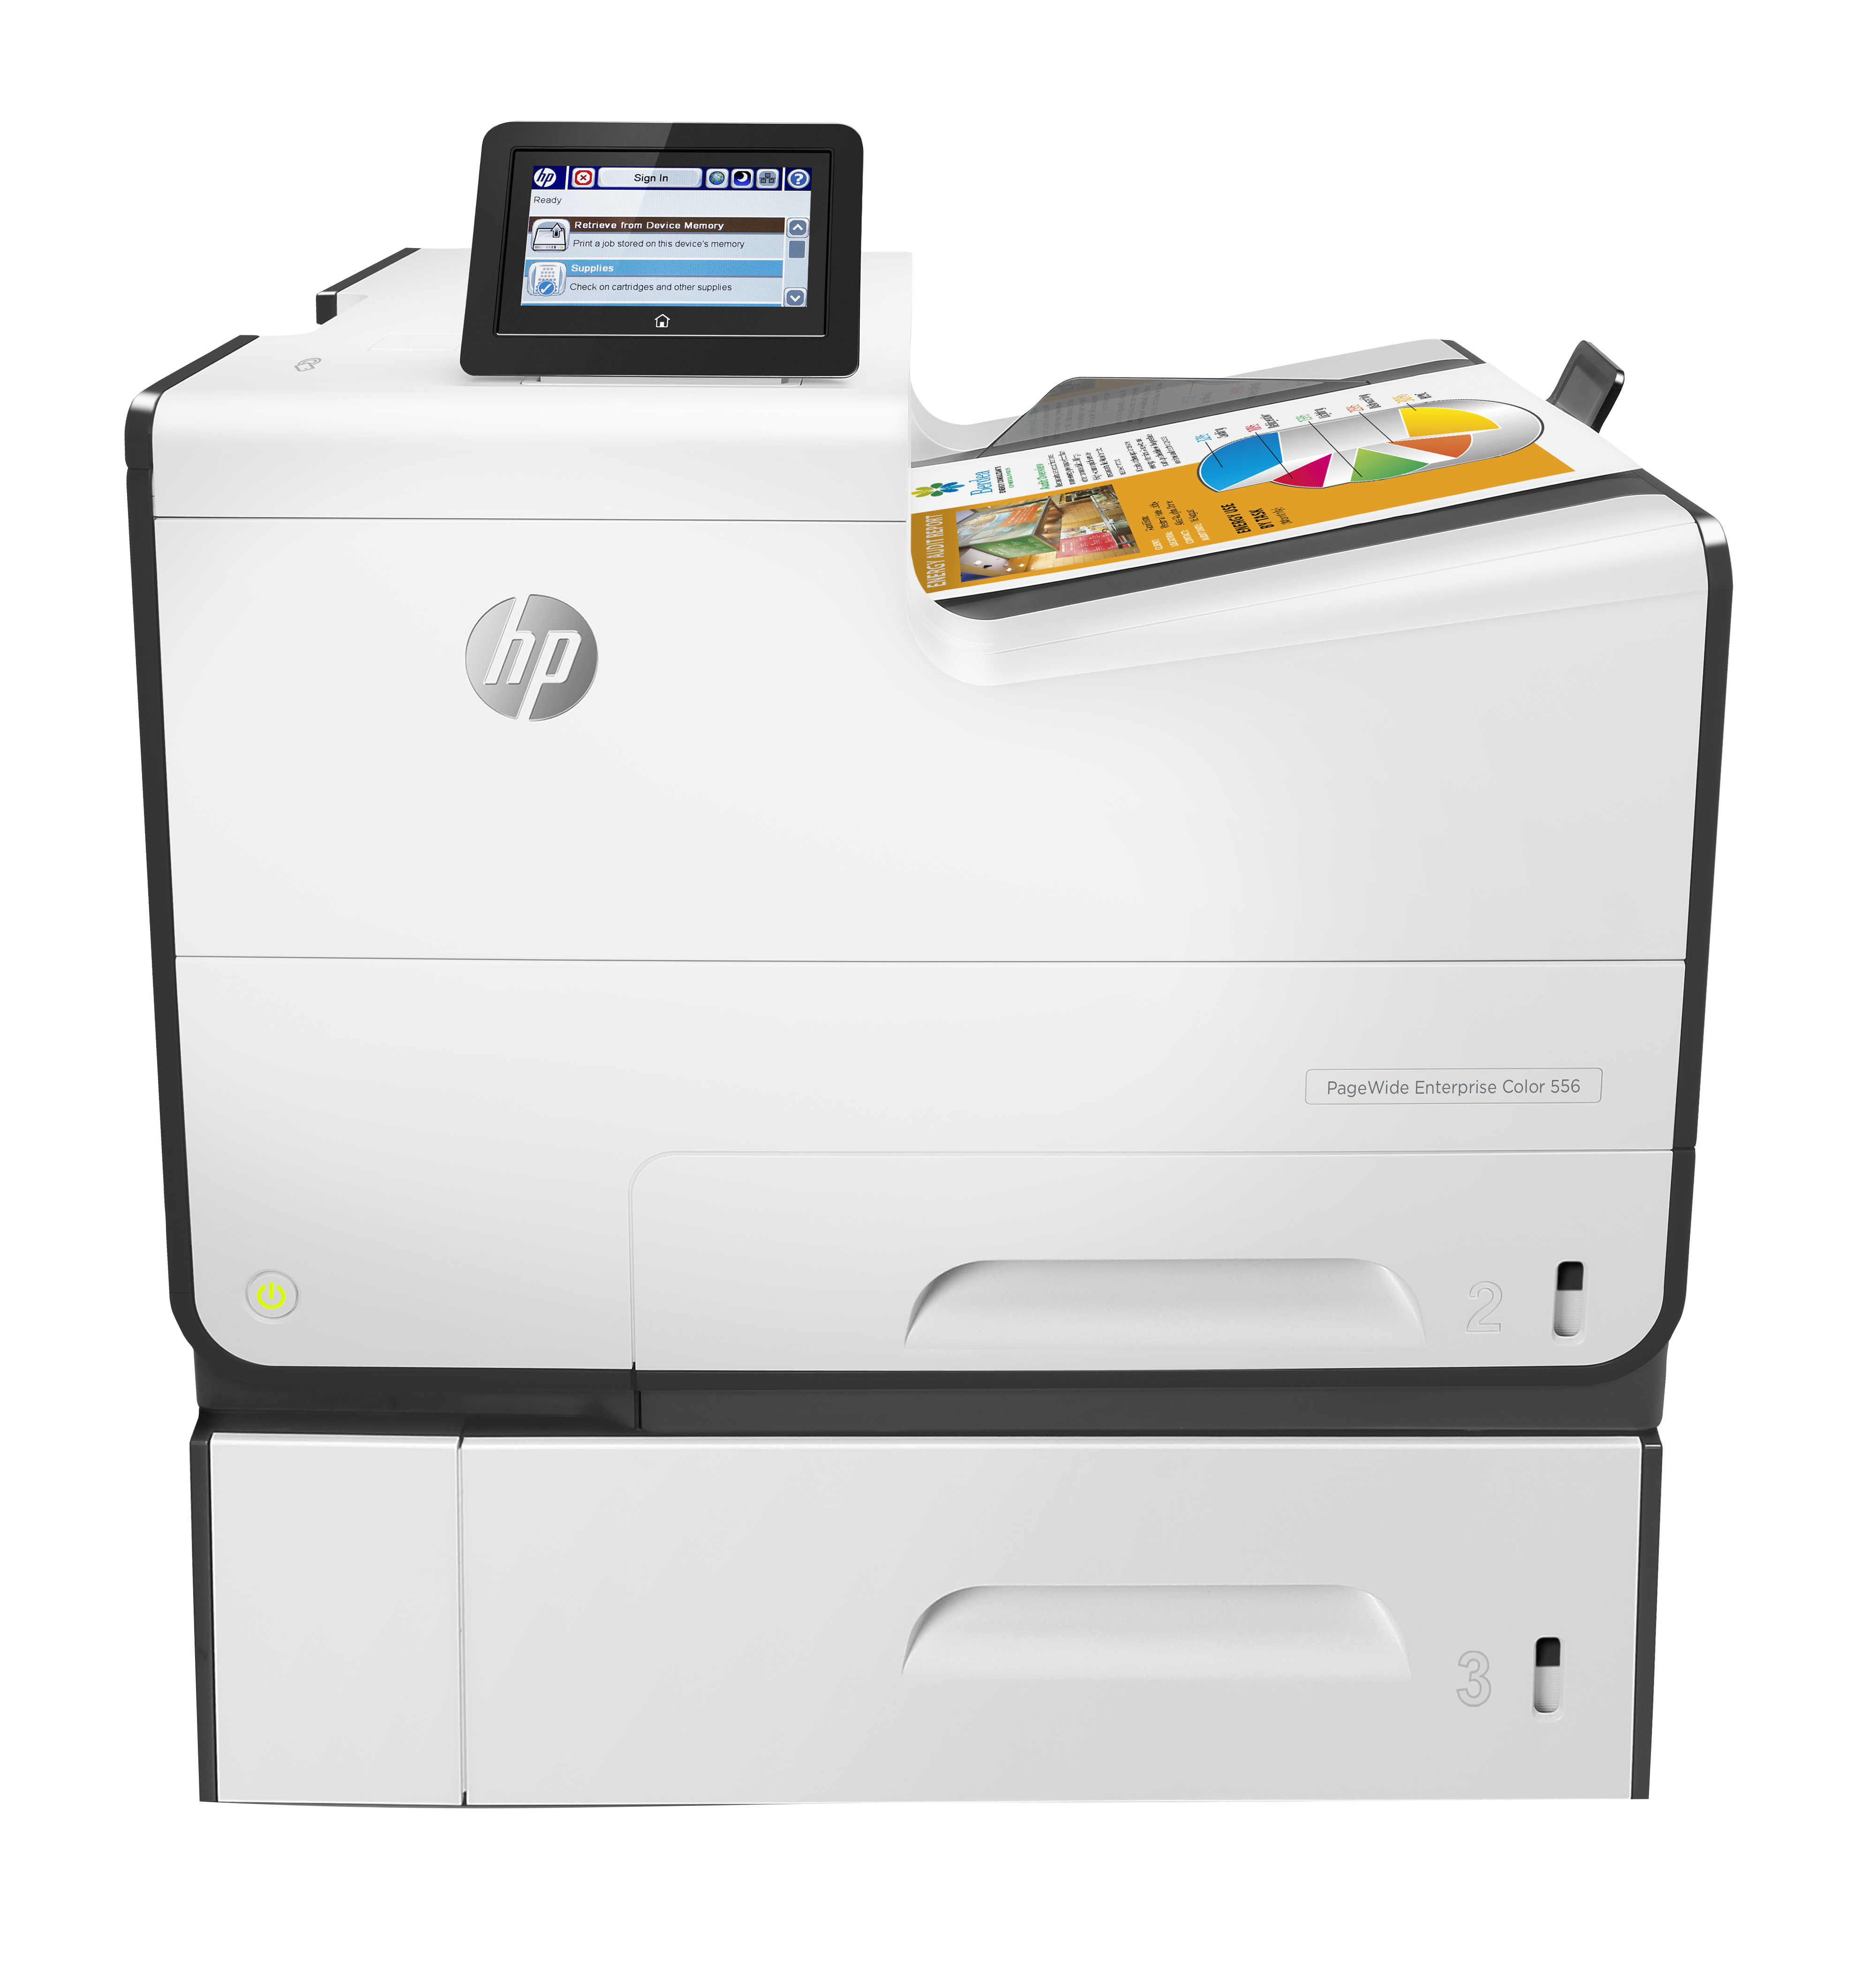 HP PageWide Enterprise Color 556xh inkjet printer